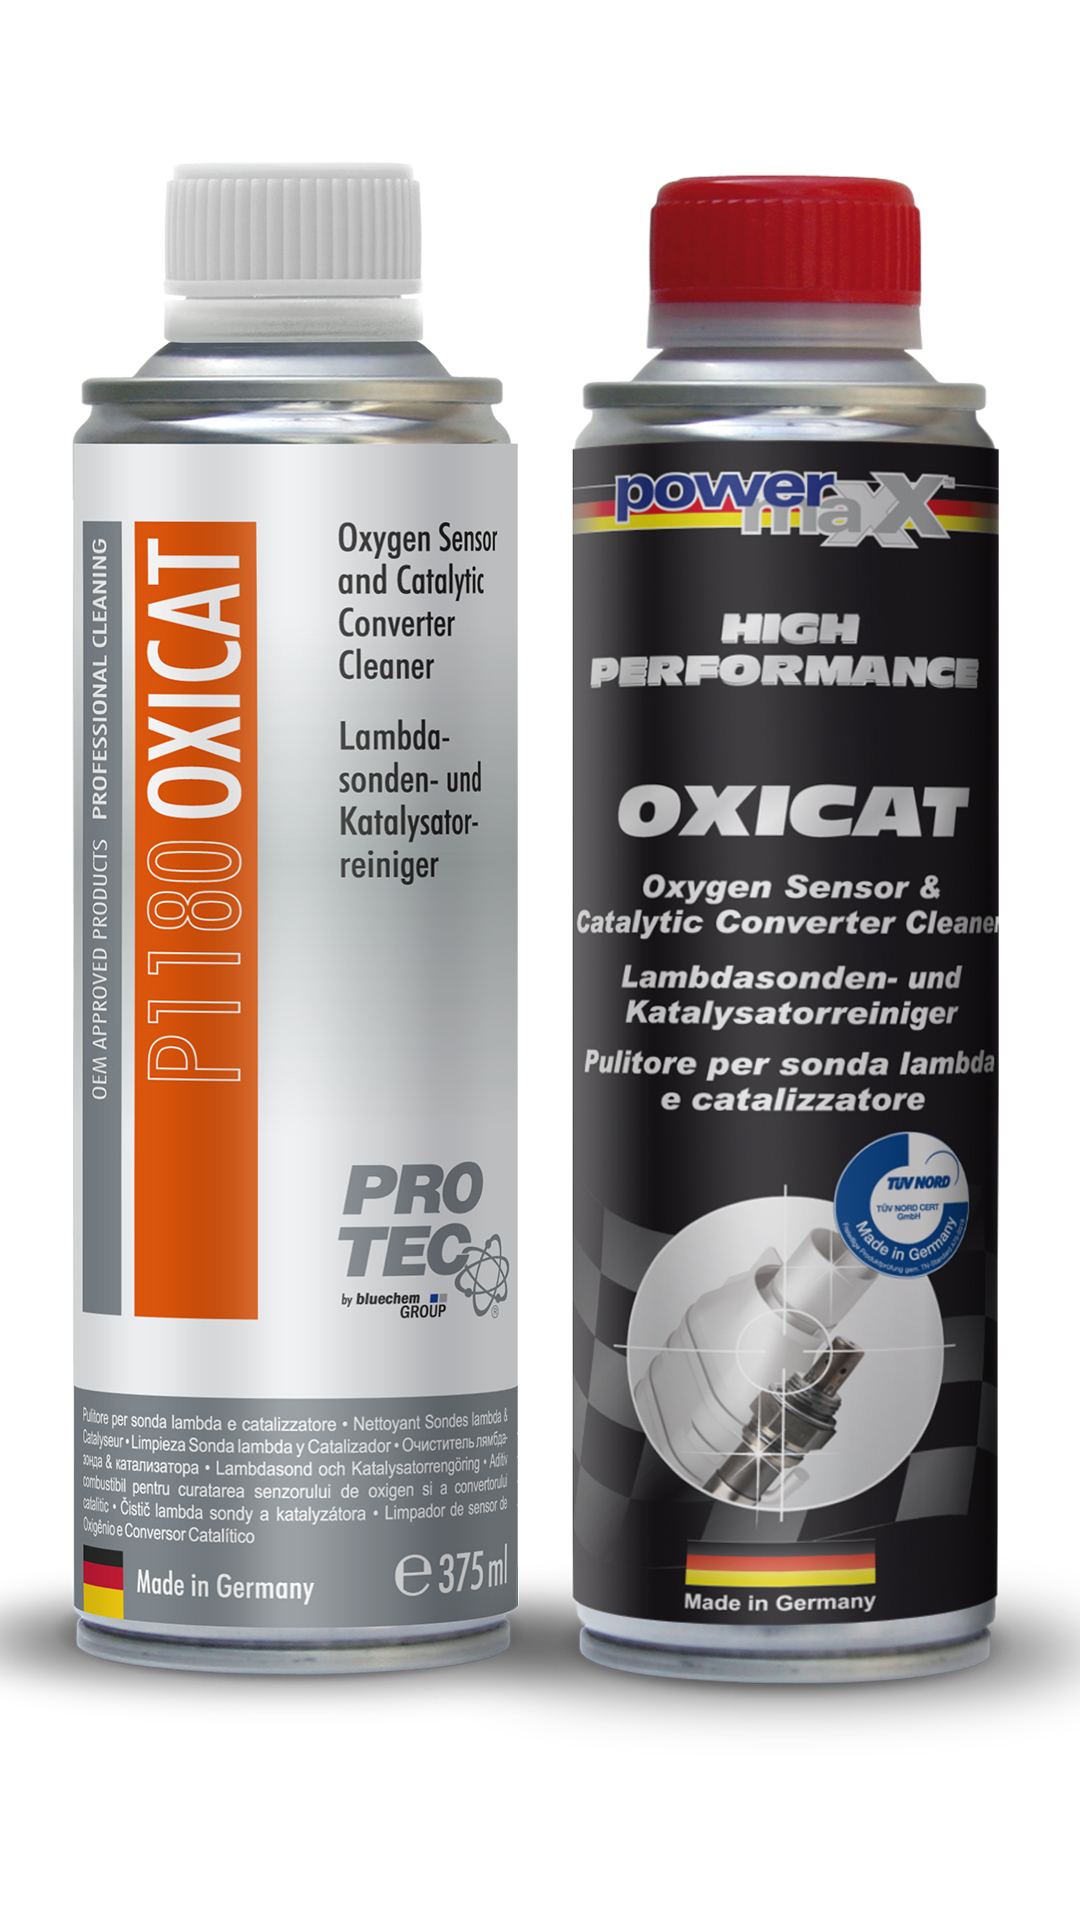 Oxygen Sensor & Catalytic Converter Cleaner